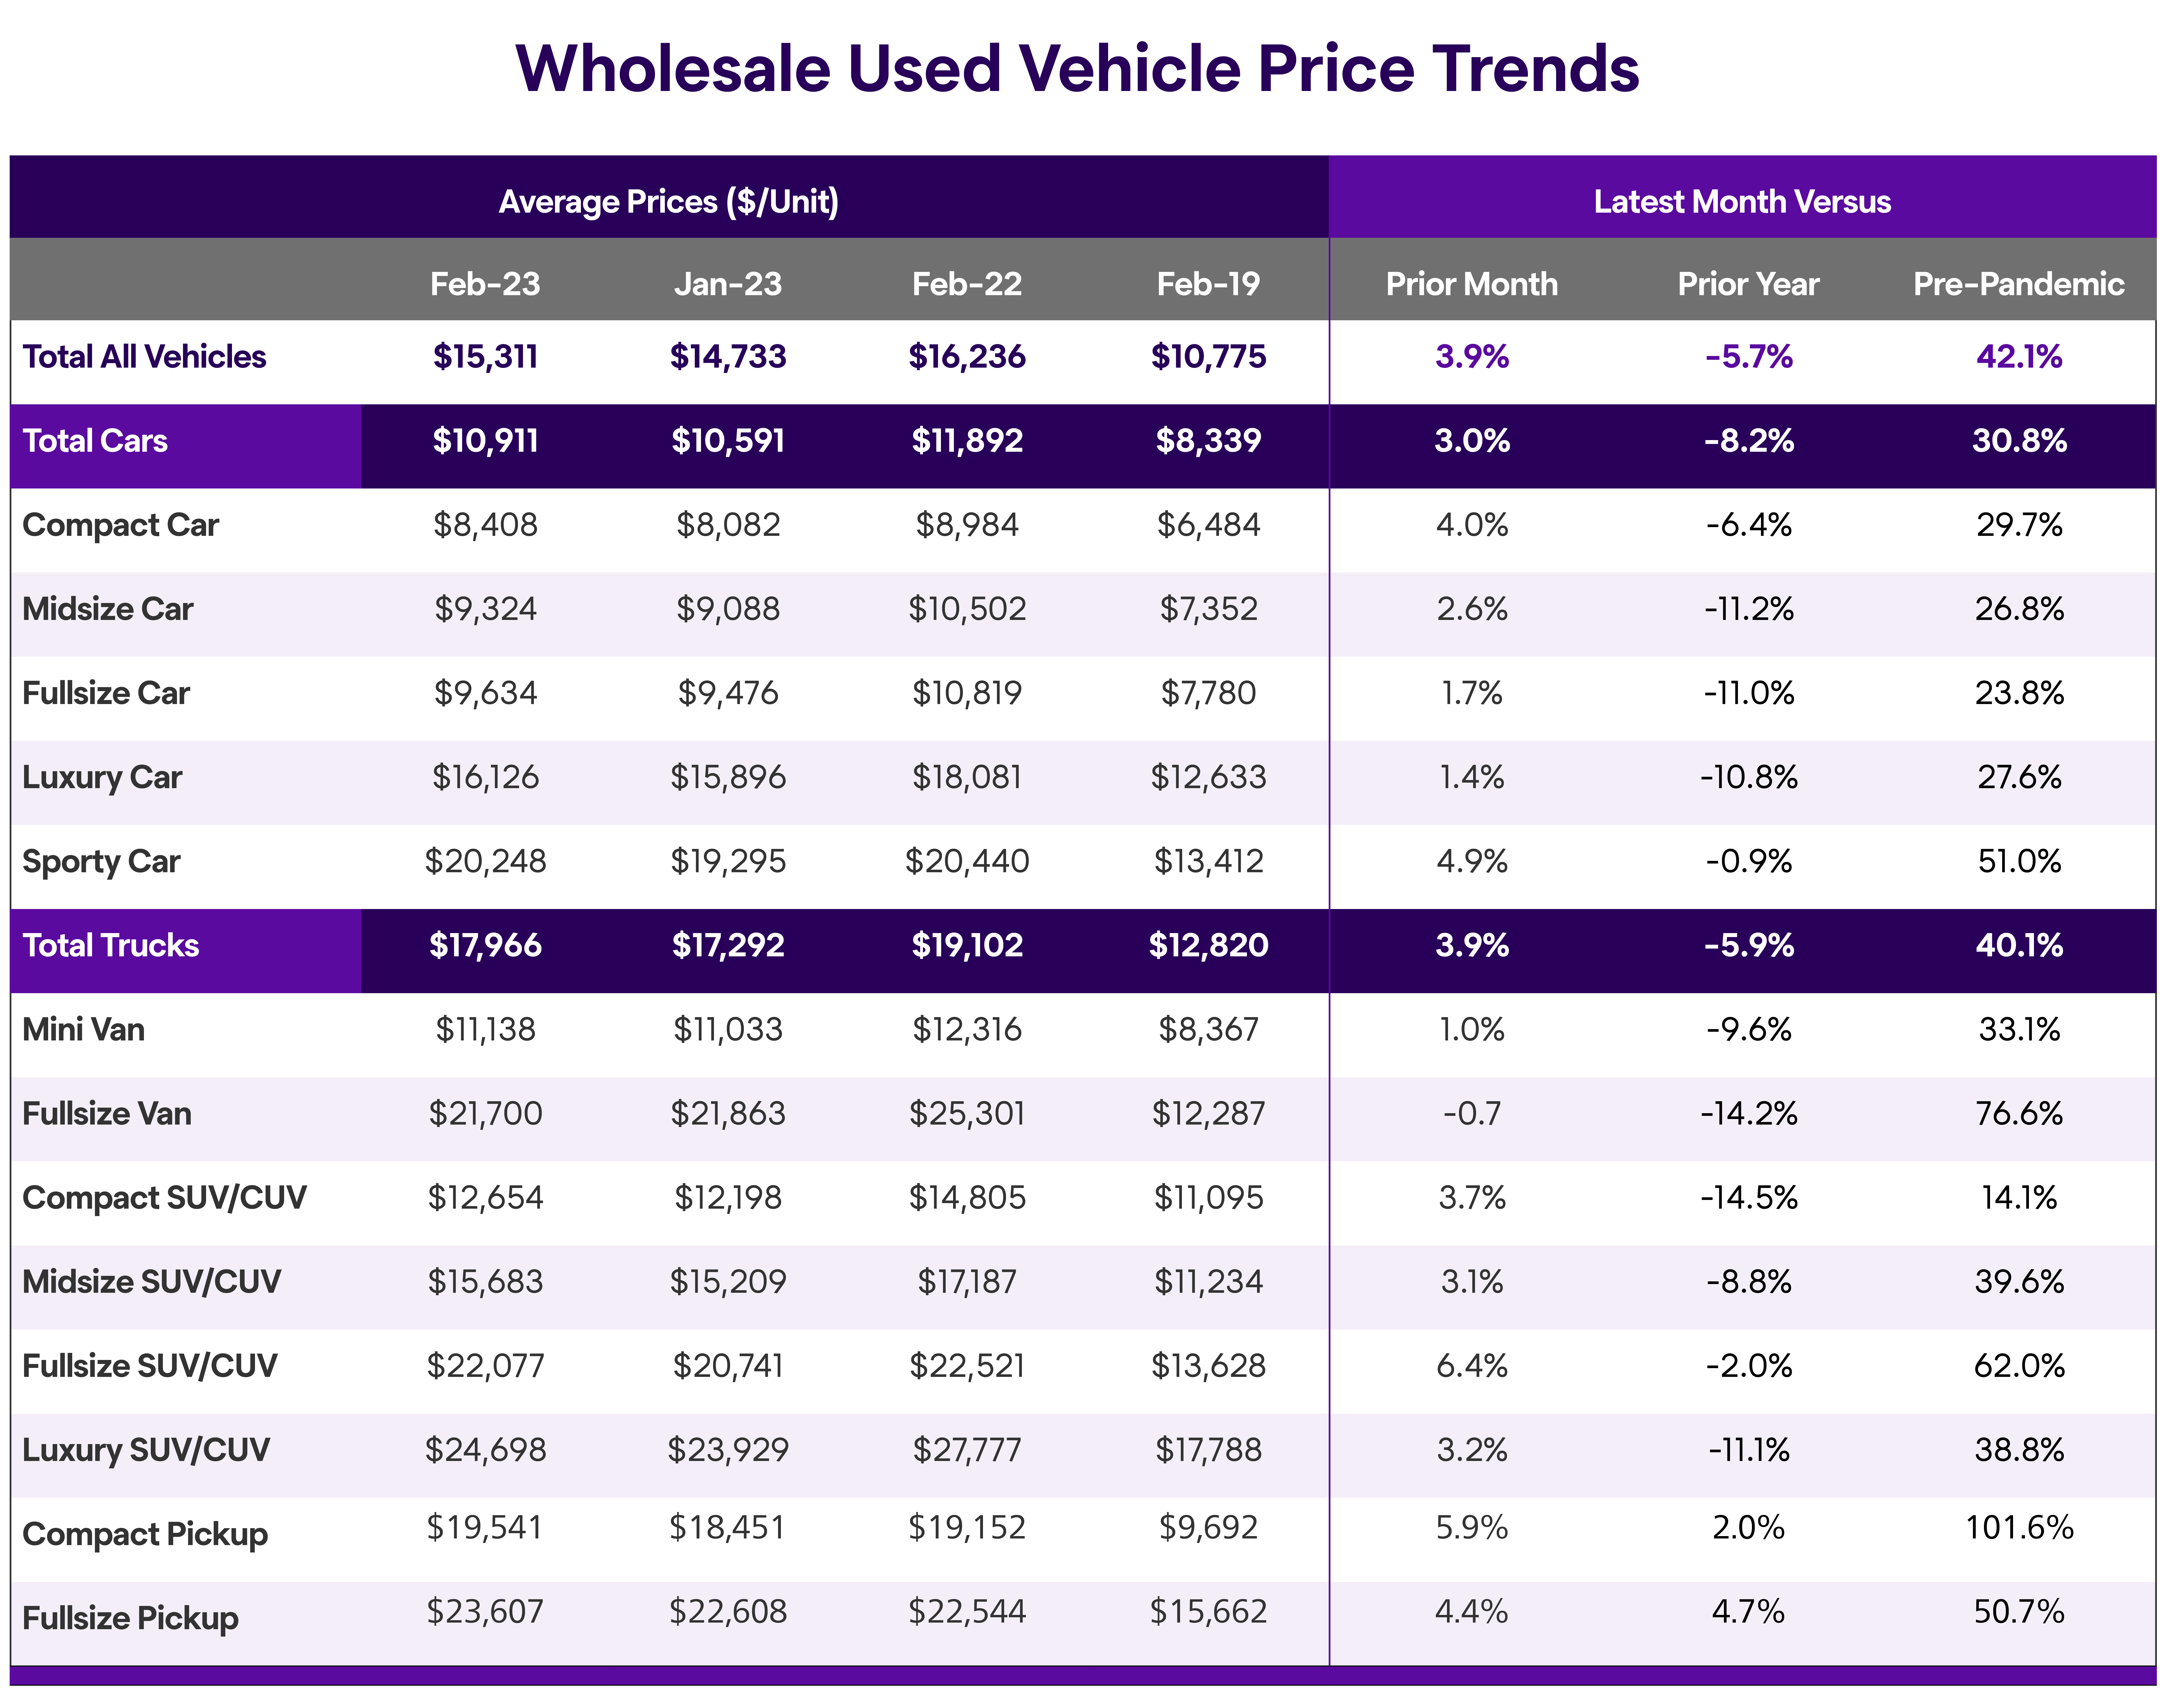 Kontos Q1 2023 Wholesale Used Vehicle Price Trends